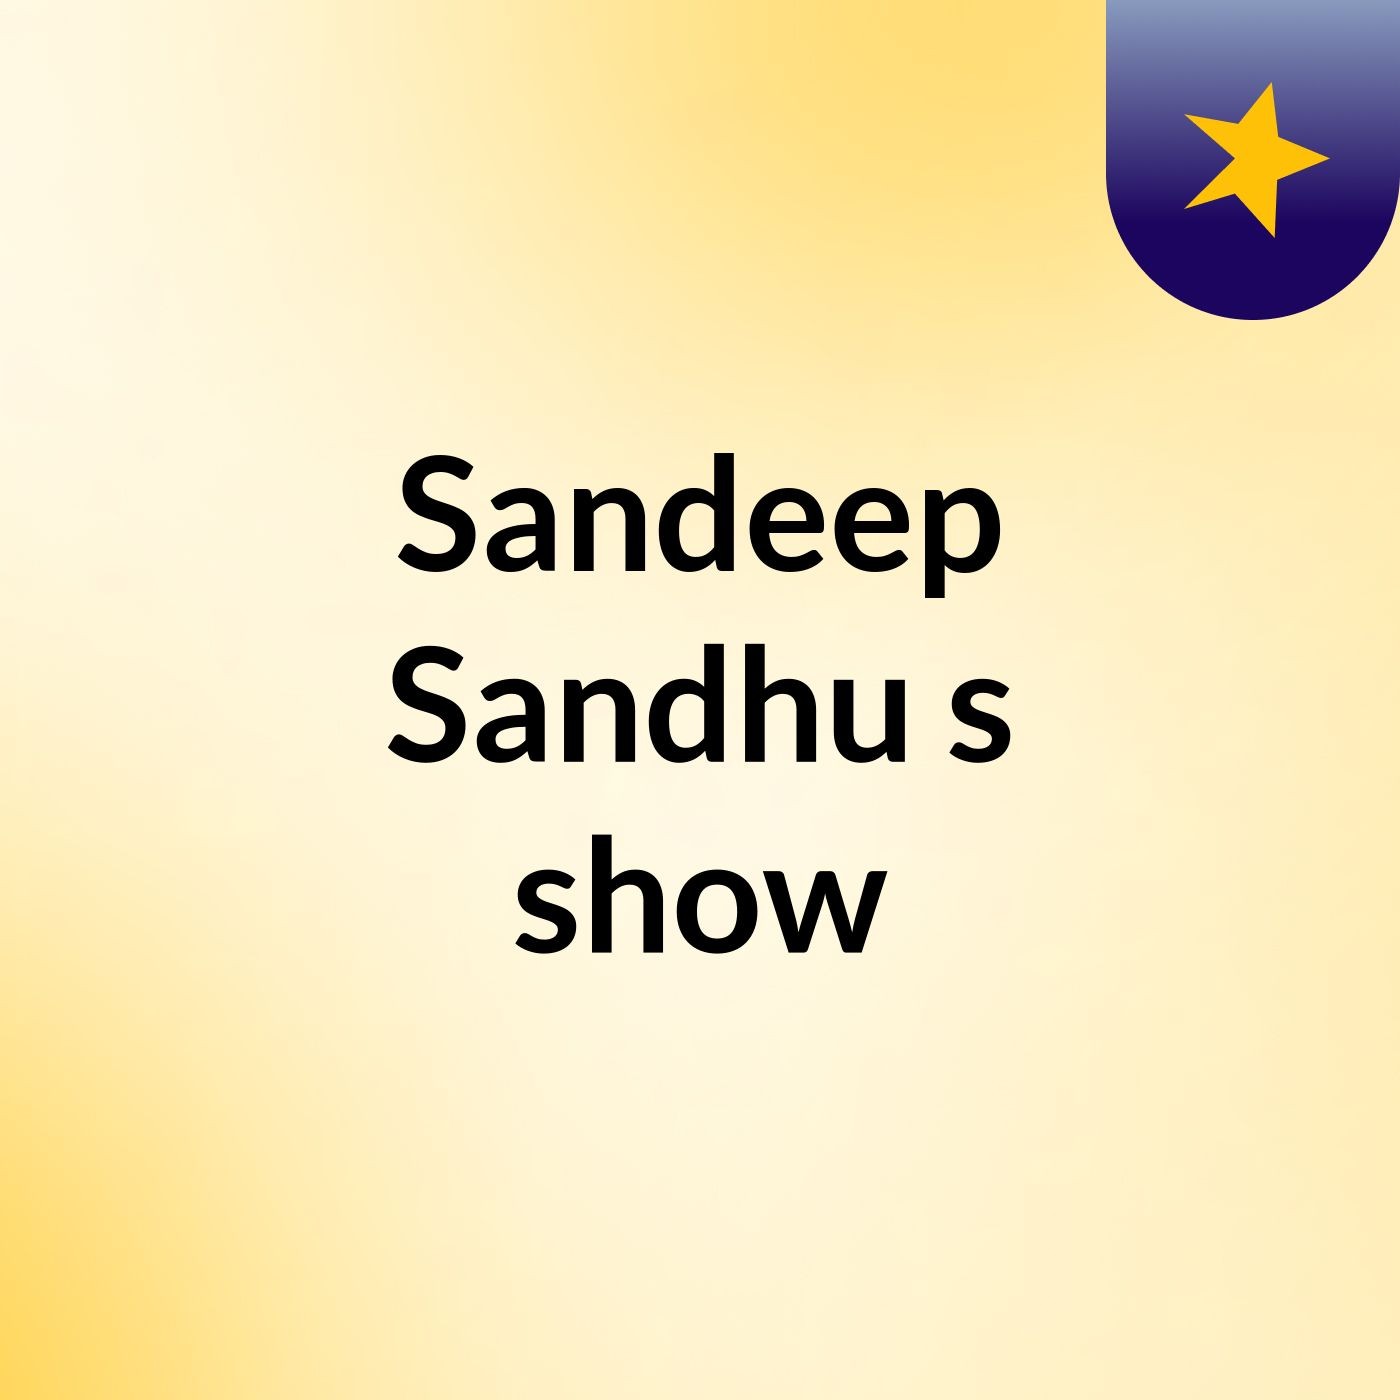 Sandeep Sandhu's show